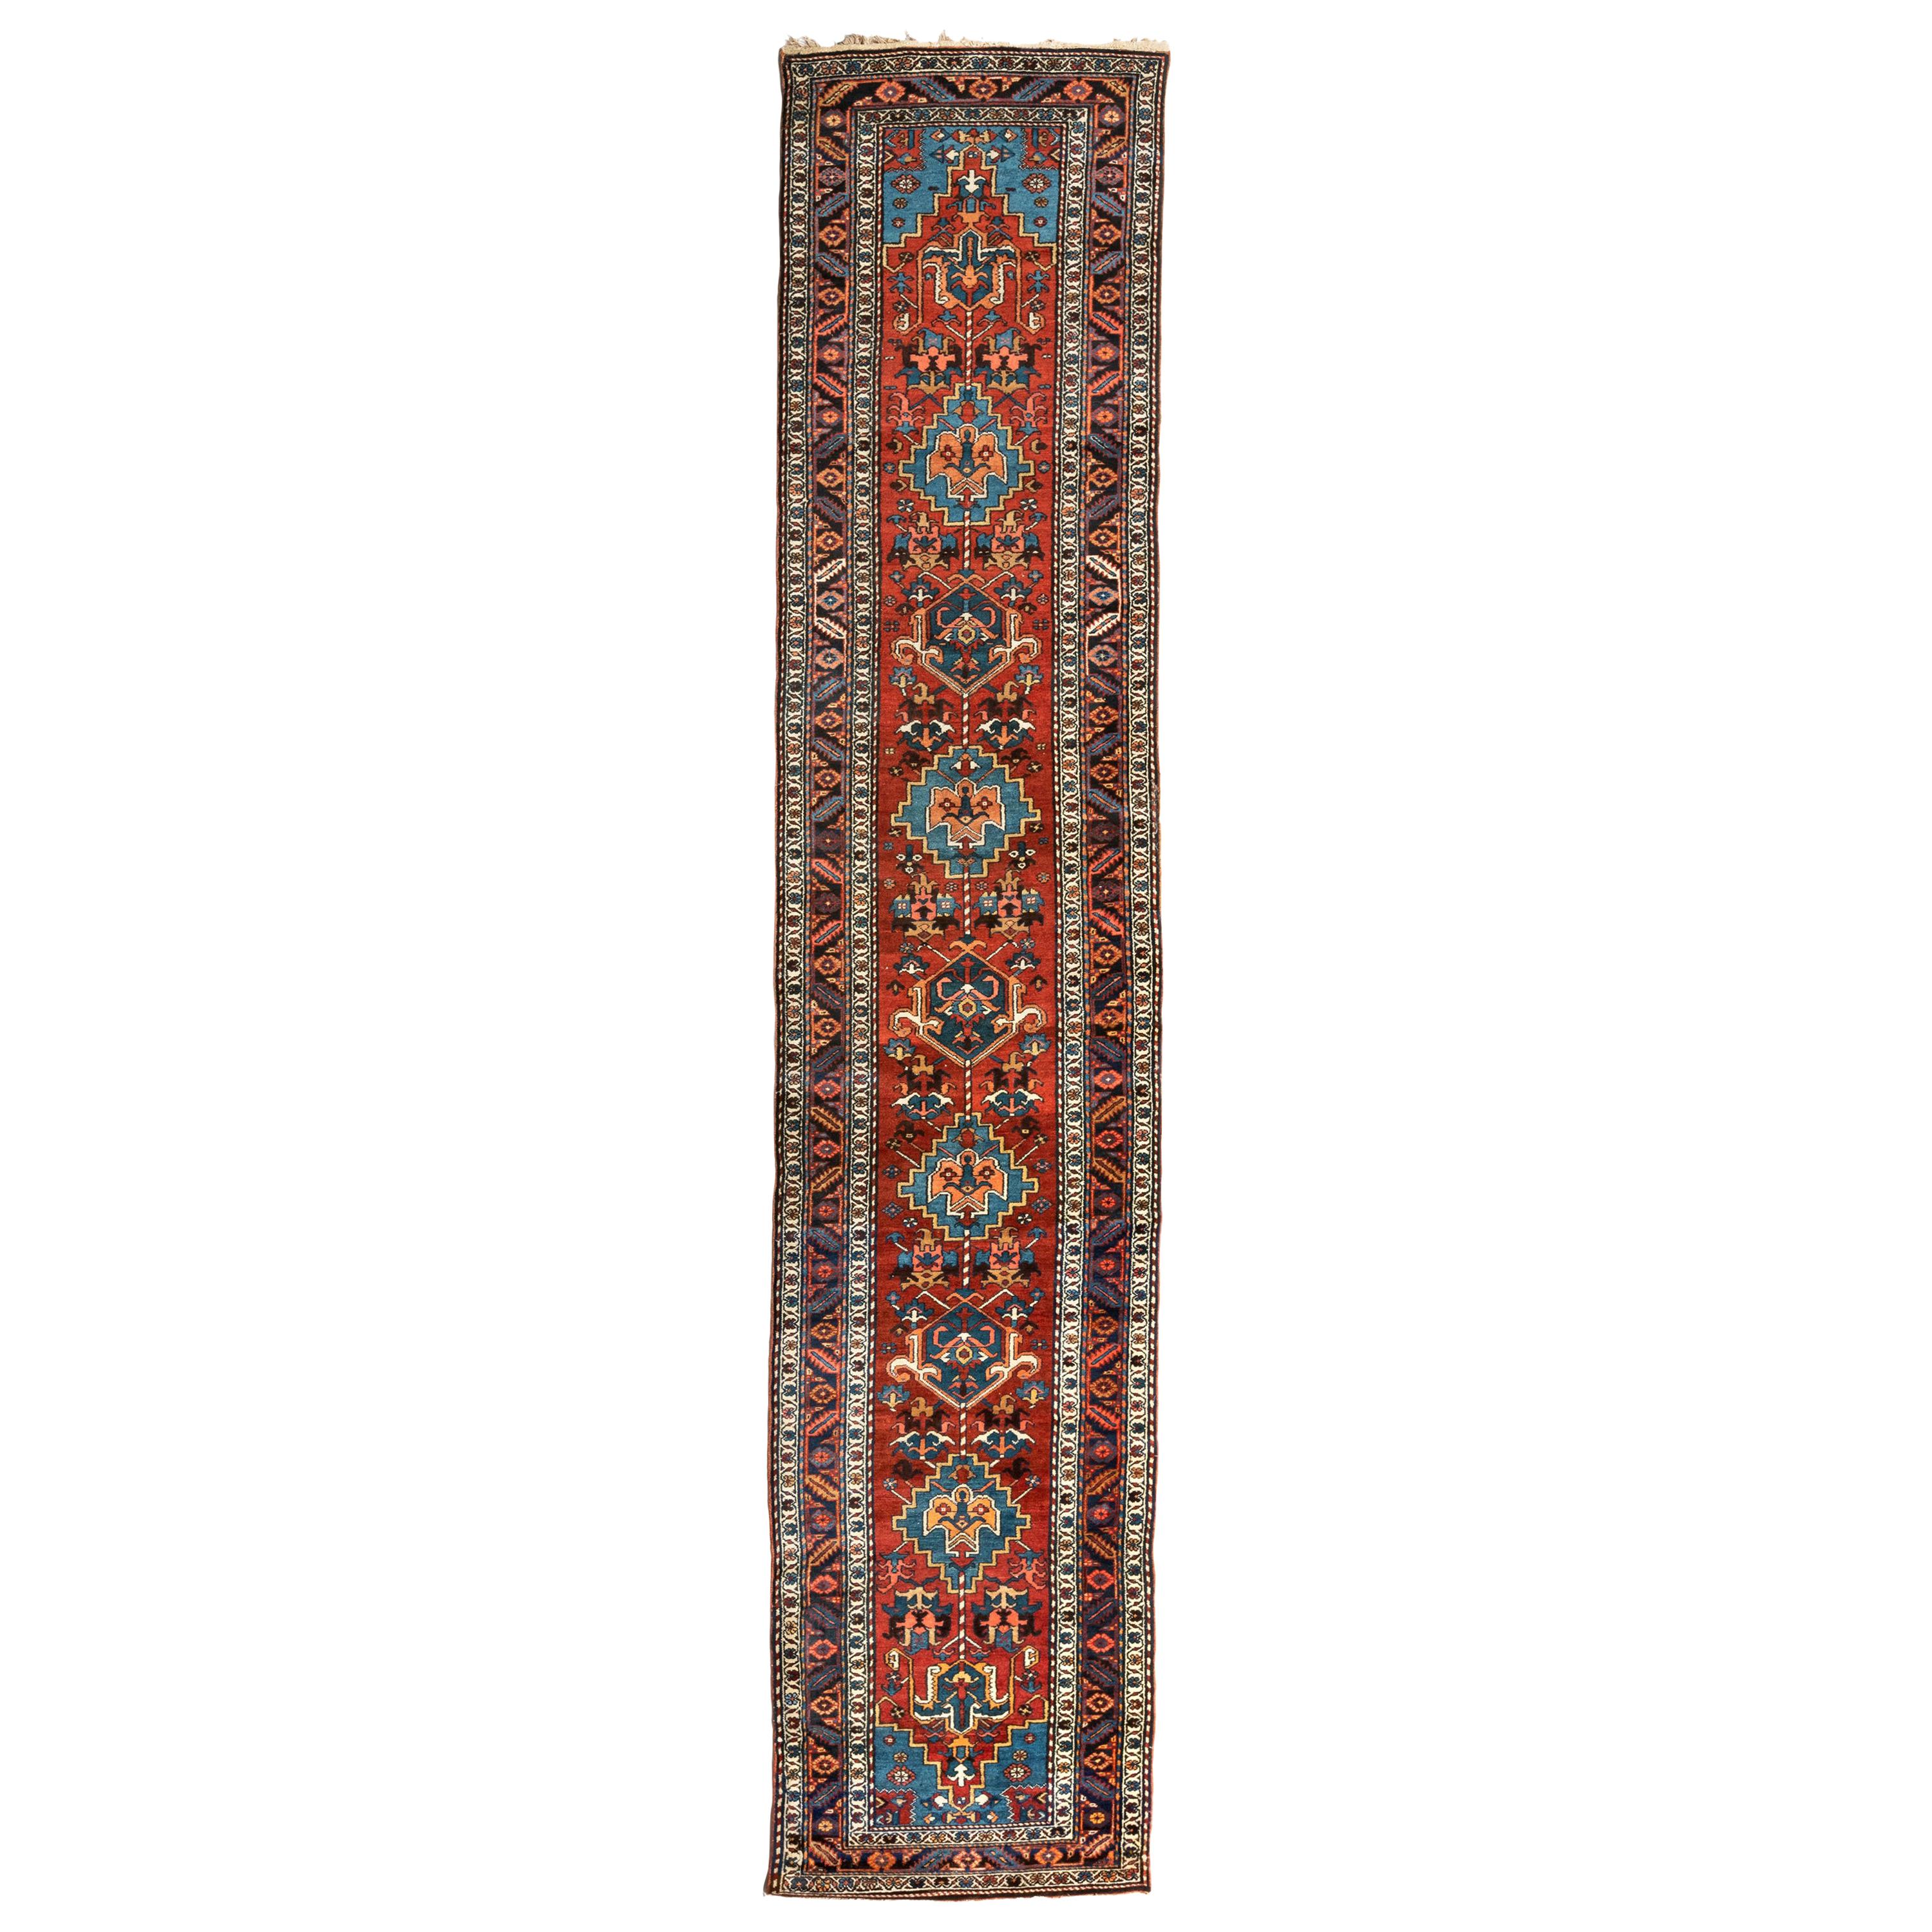 Antique Persian Burgundy Blue Geometric Tribal Heriz Runner Rug circa 1920-1930s